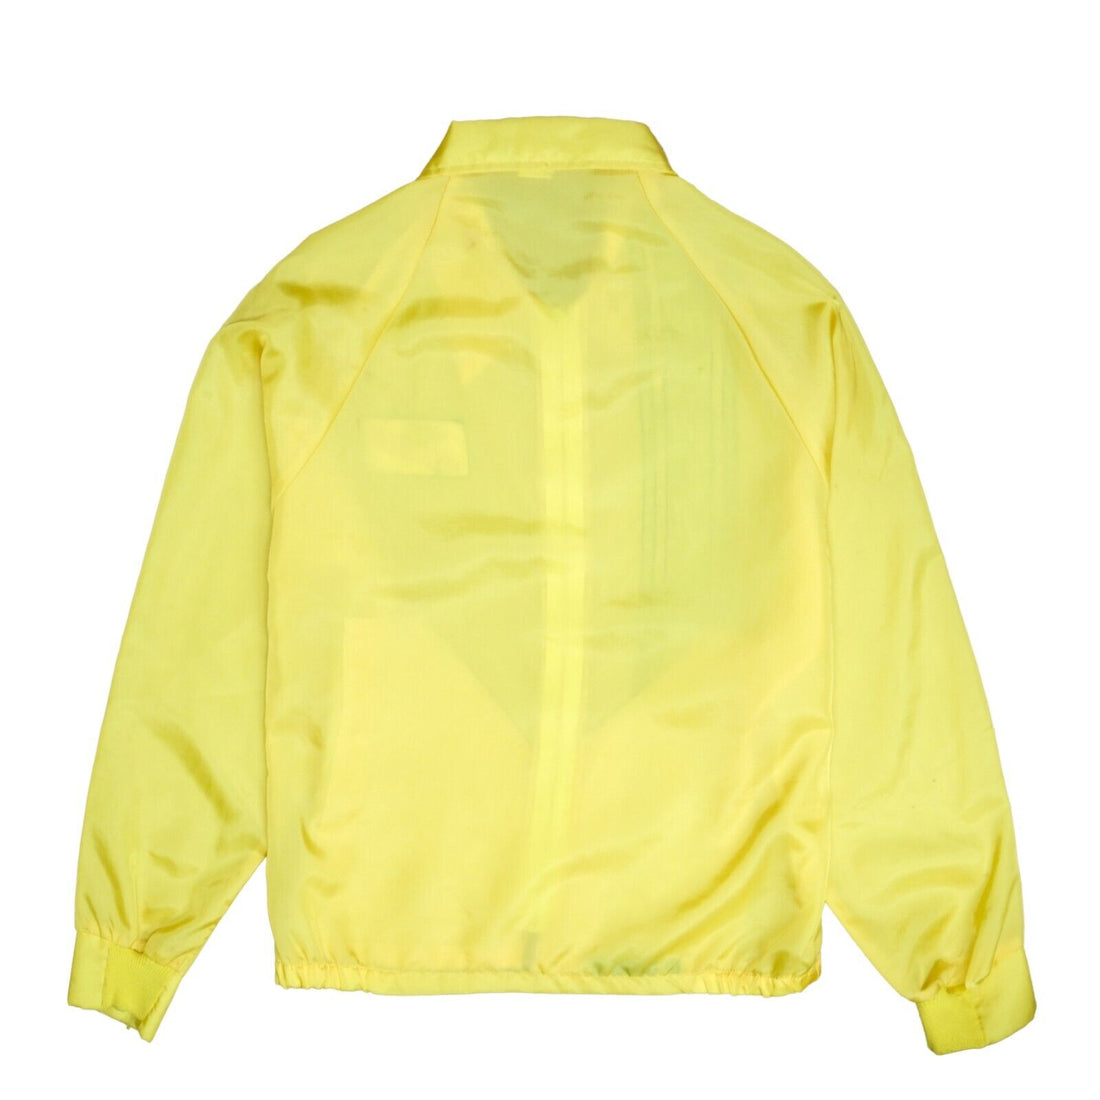 Vintage Dekals Light Racing Jacket Size Medium Yellow